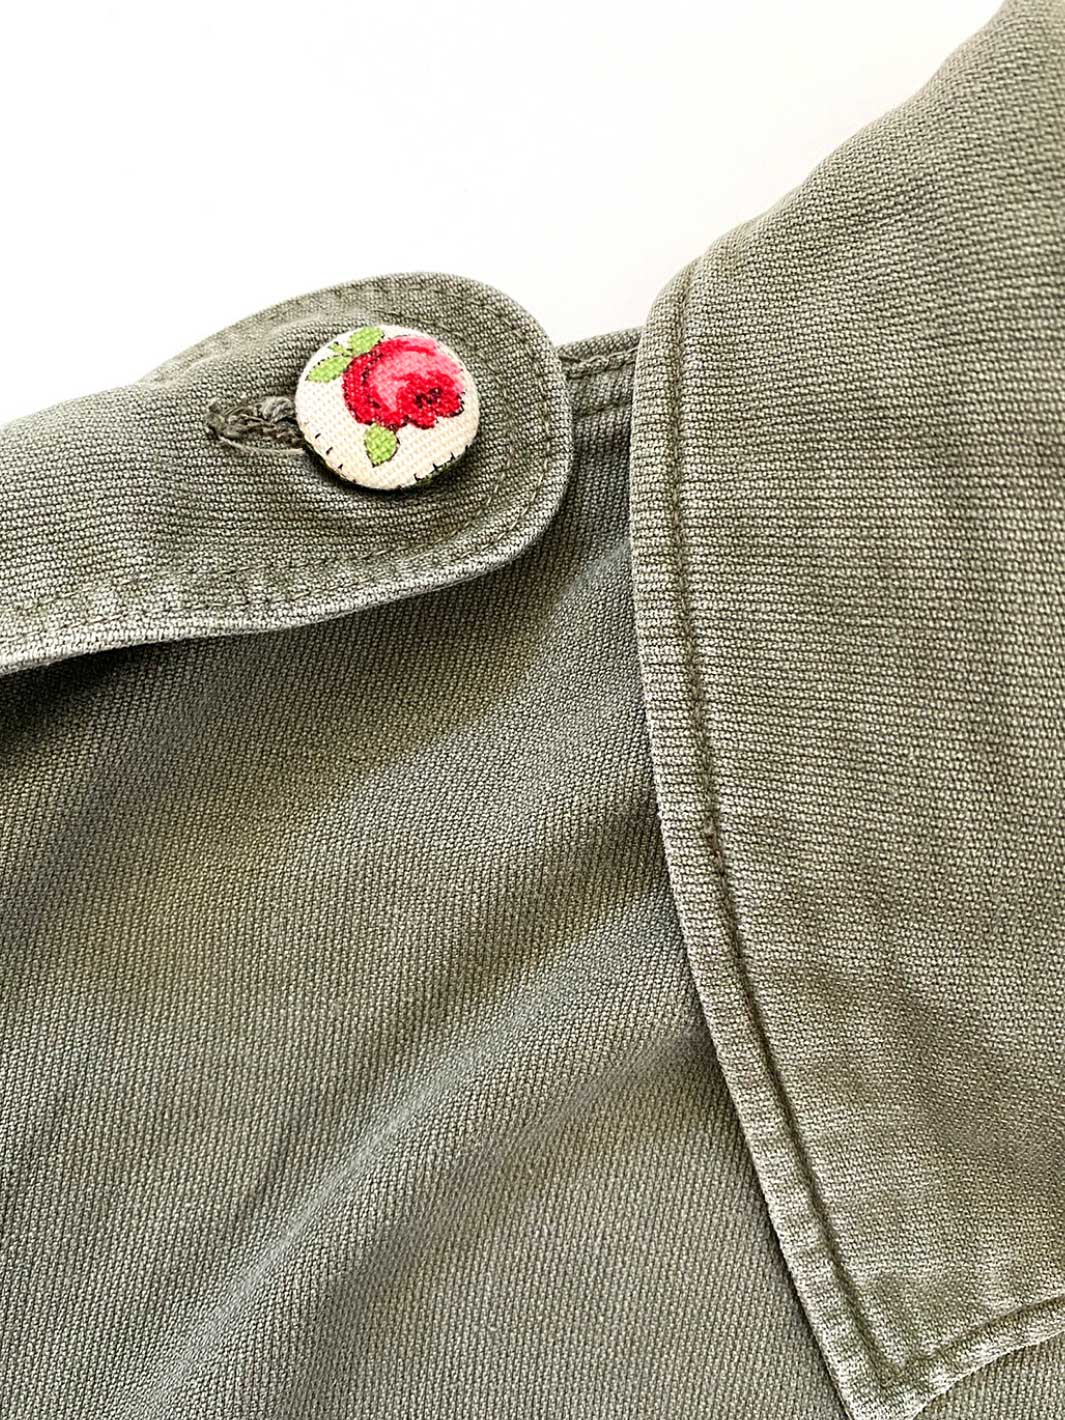 Second Life - Unisex Vintage Overshirt "The 5 Pocket Jacket" | WOTE